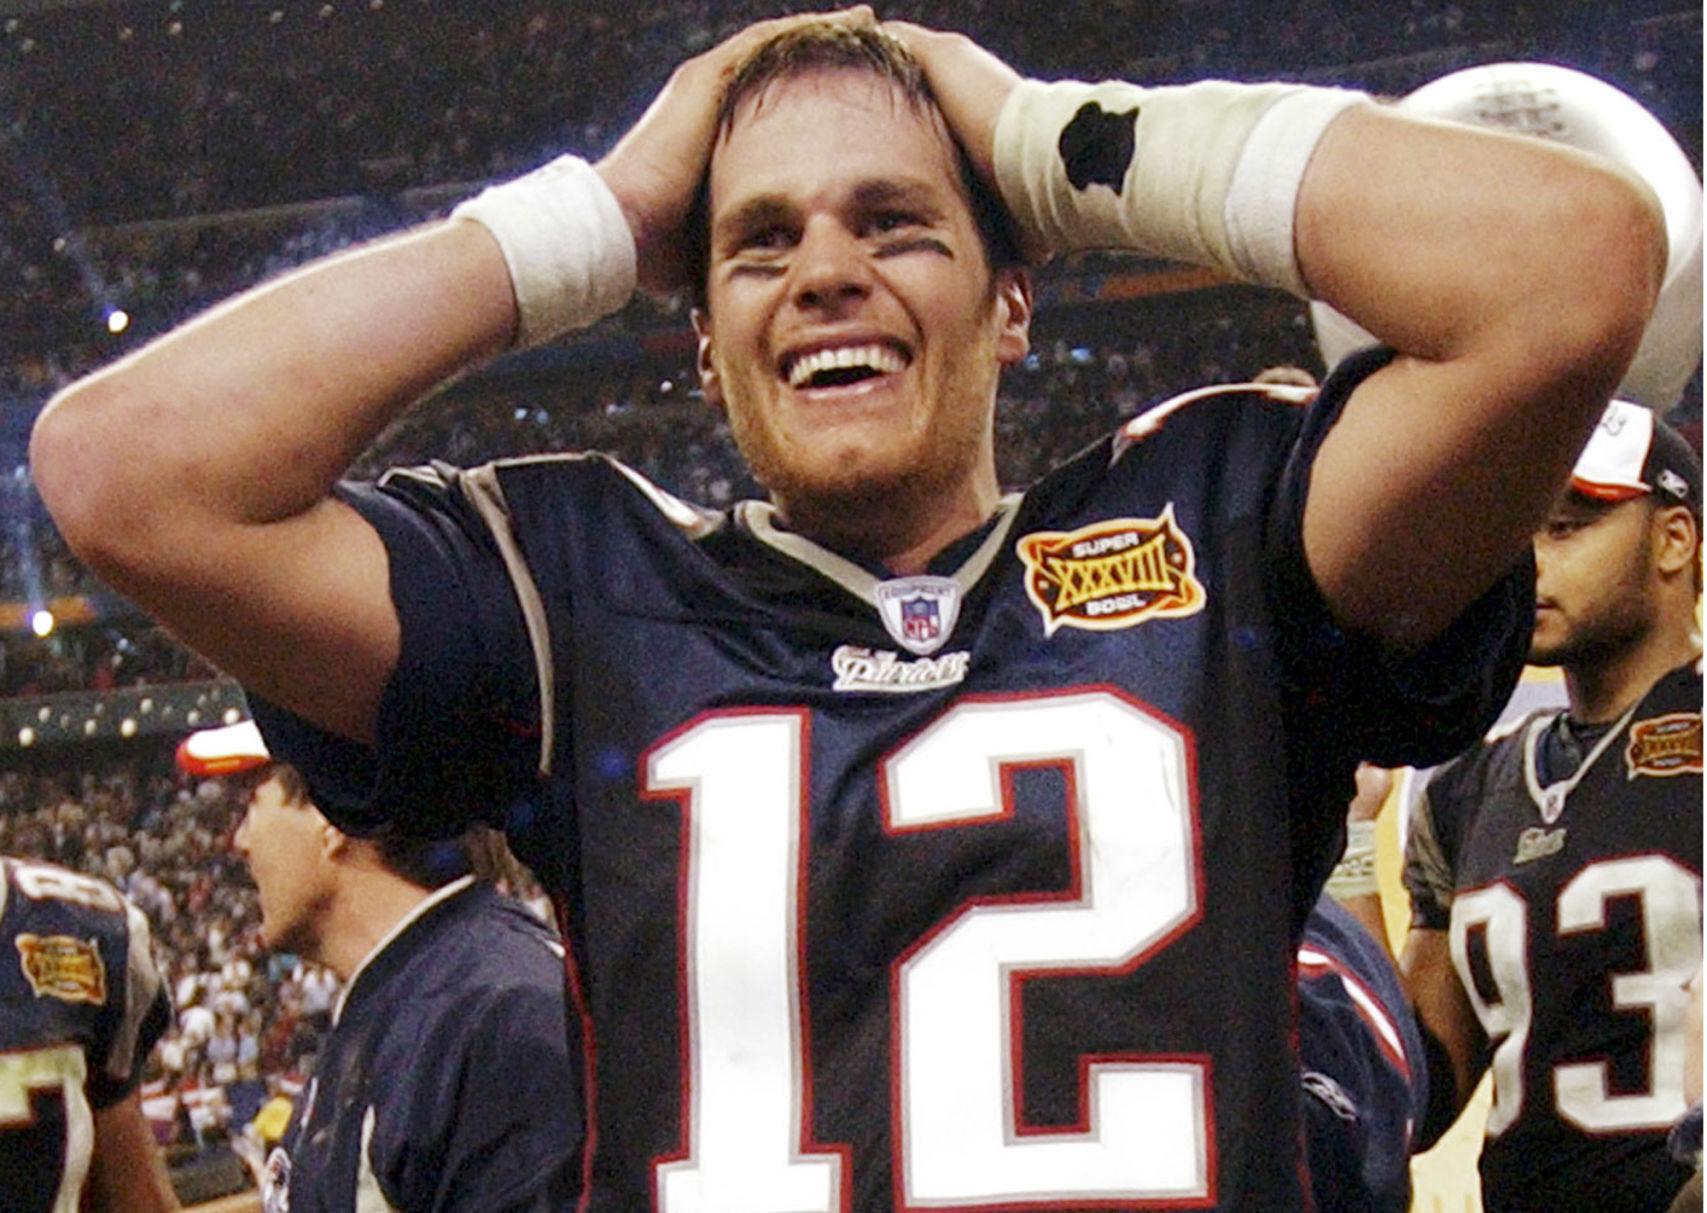 38 Super Bowl Xxxviii Qb Tom Brady New England Patriots 3635